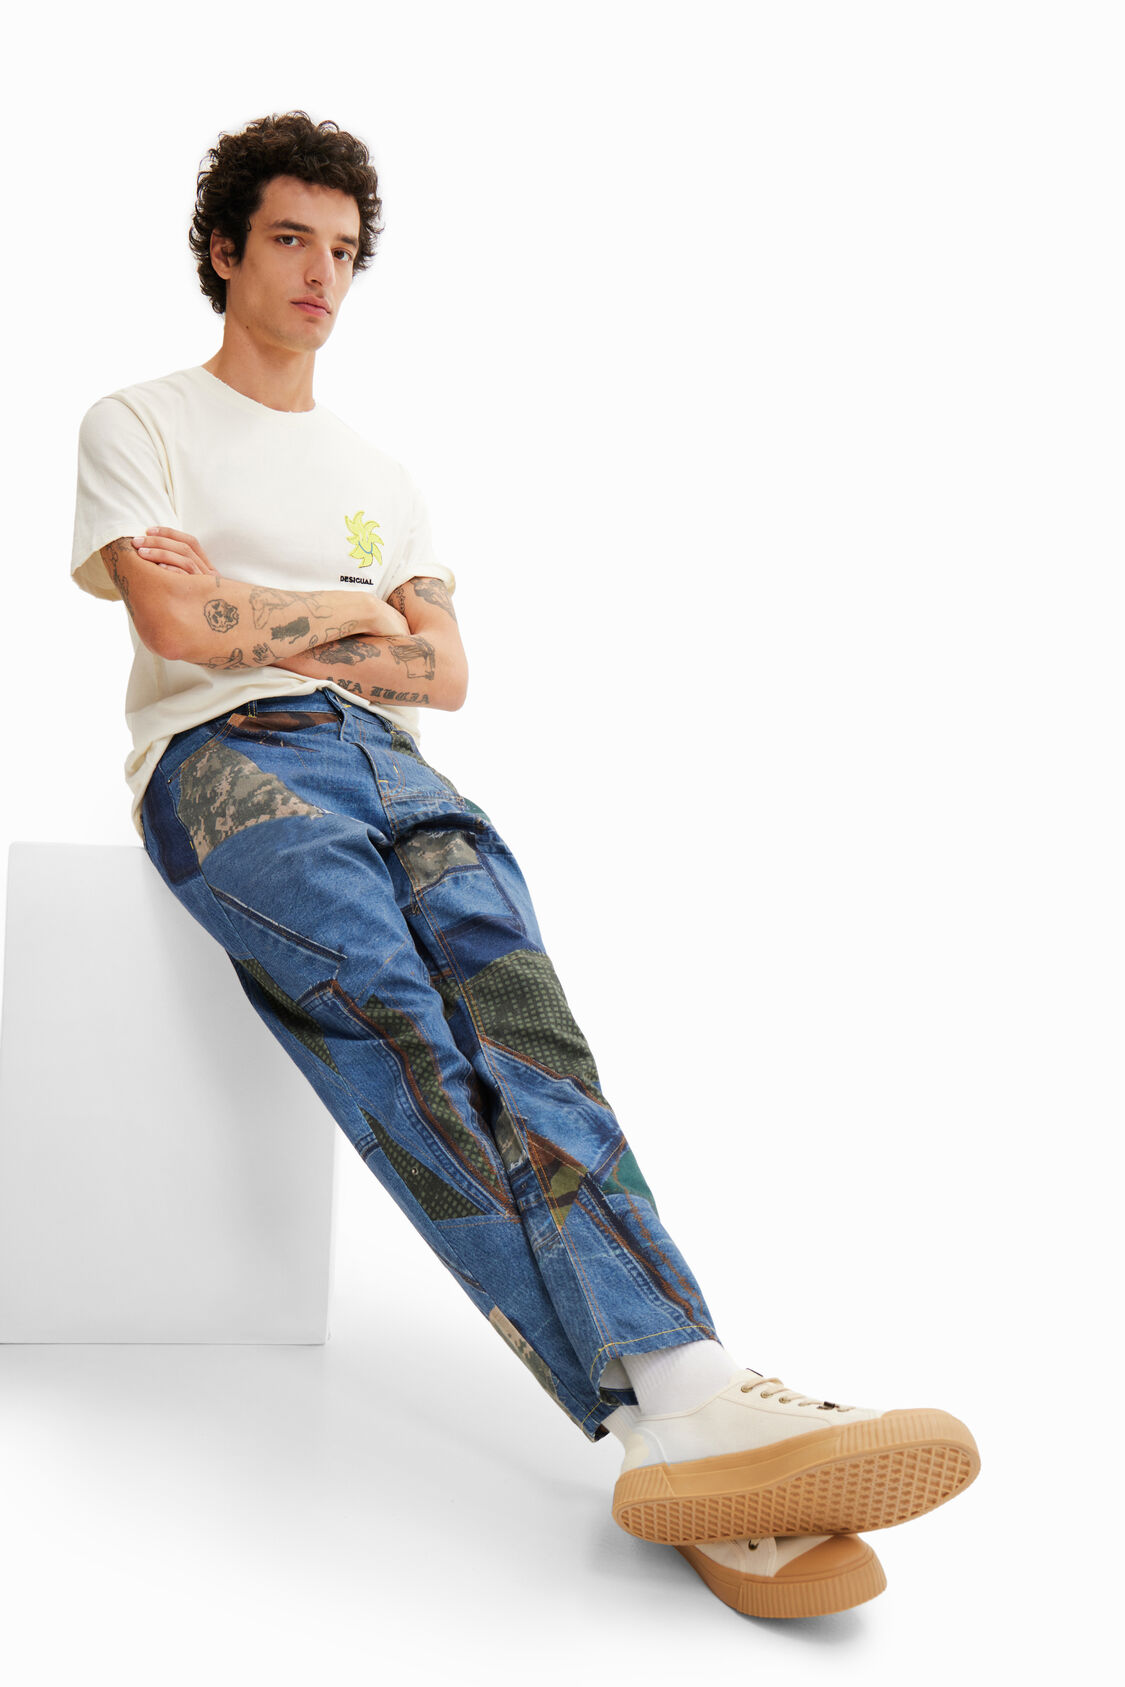 Weglaten Geweldige eik helpen Men's Relaxed patchwork jeans I Desigual.com